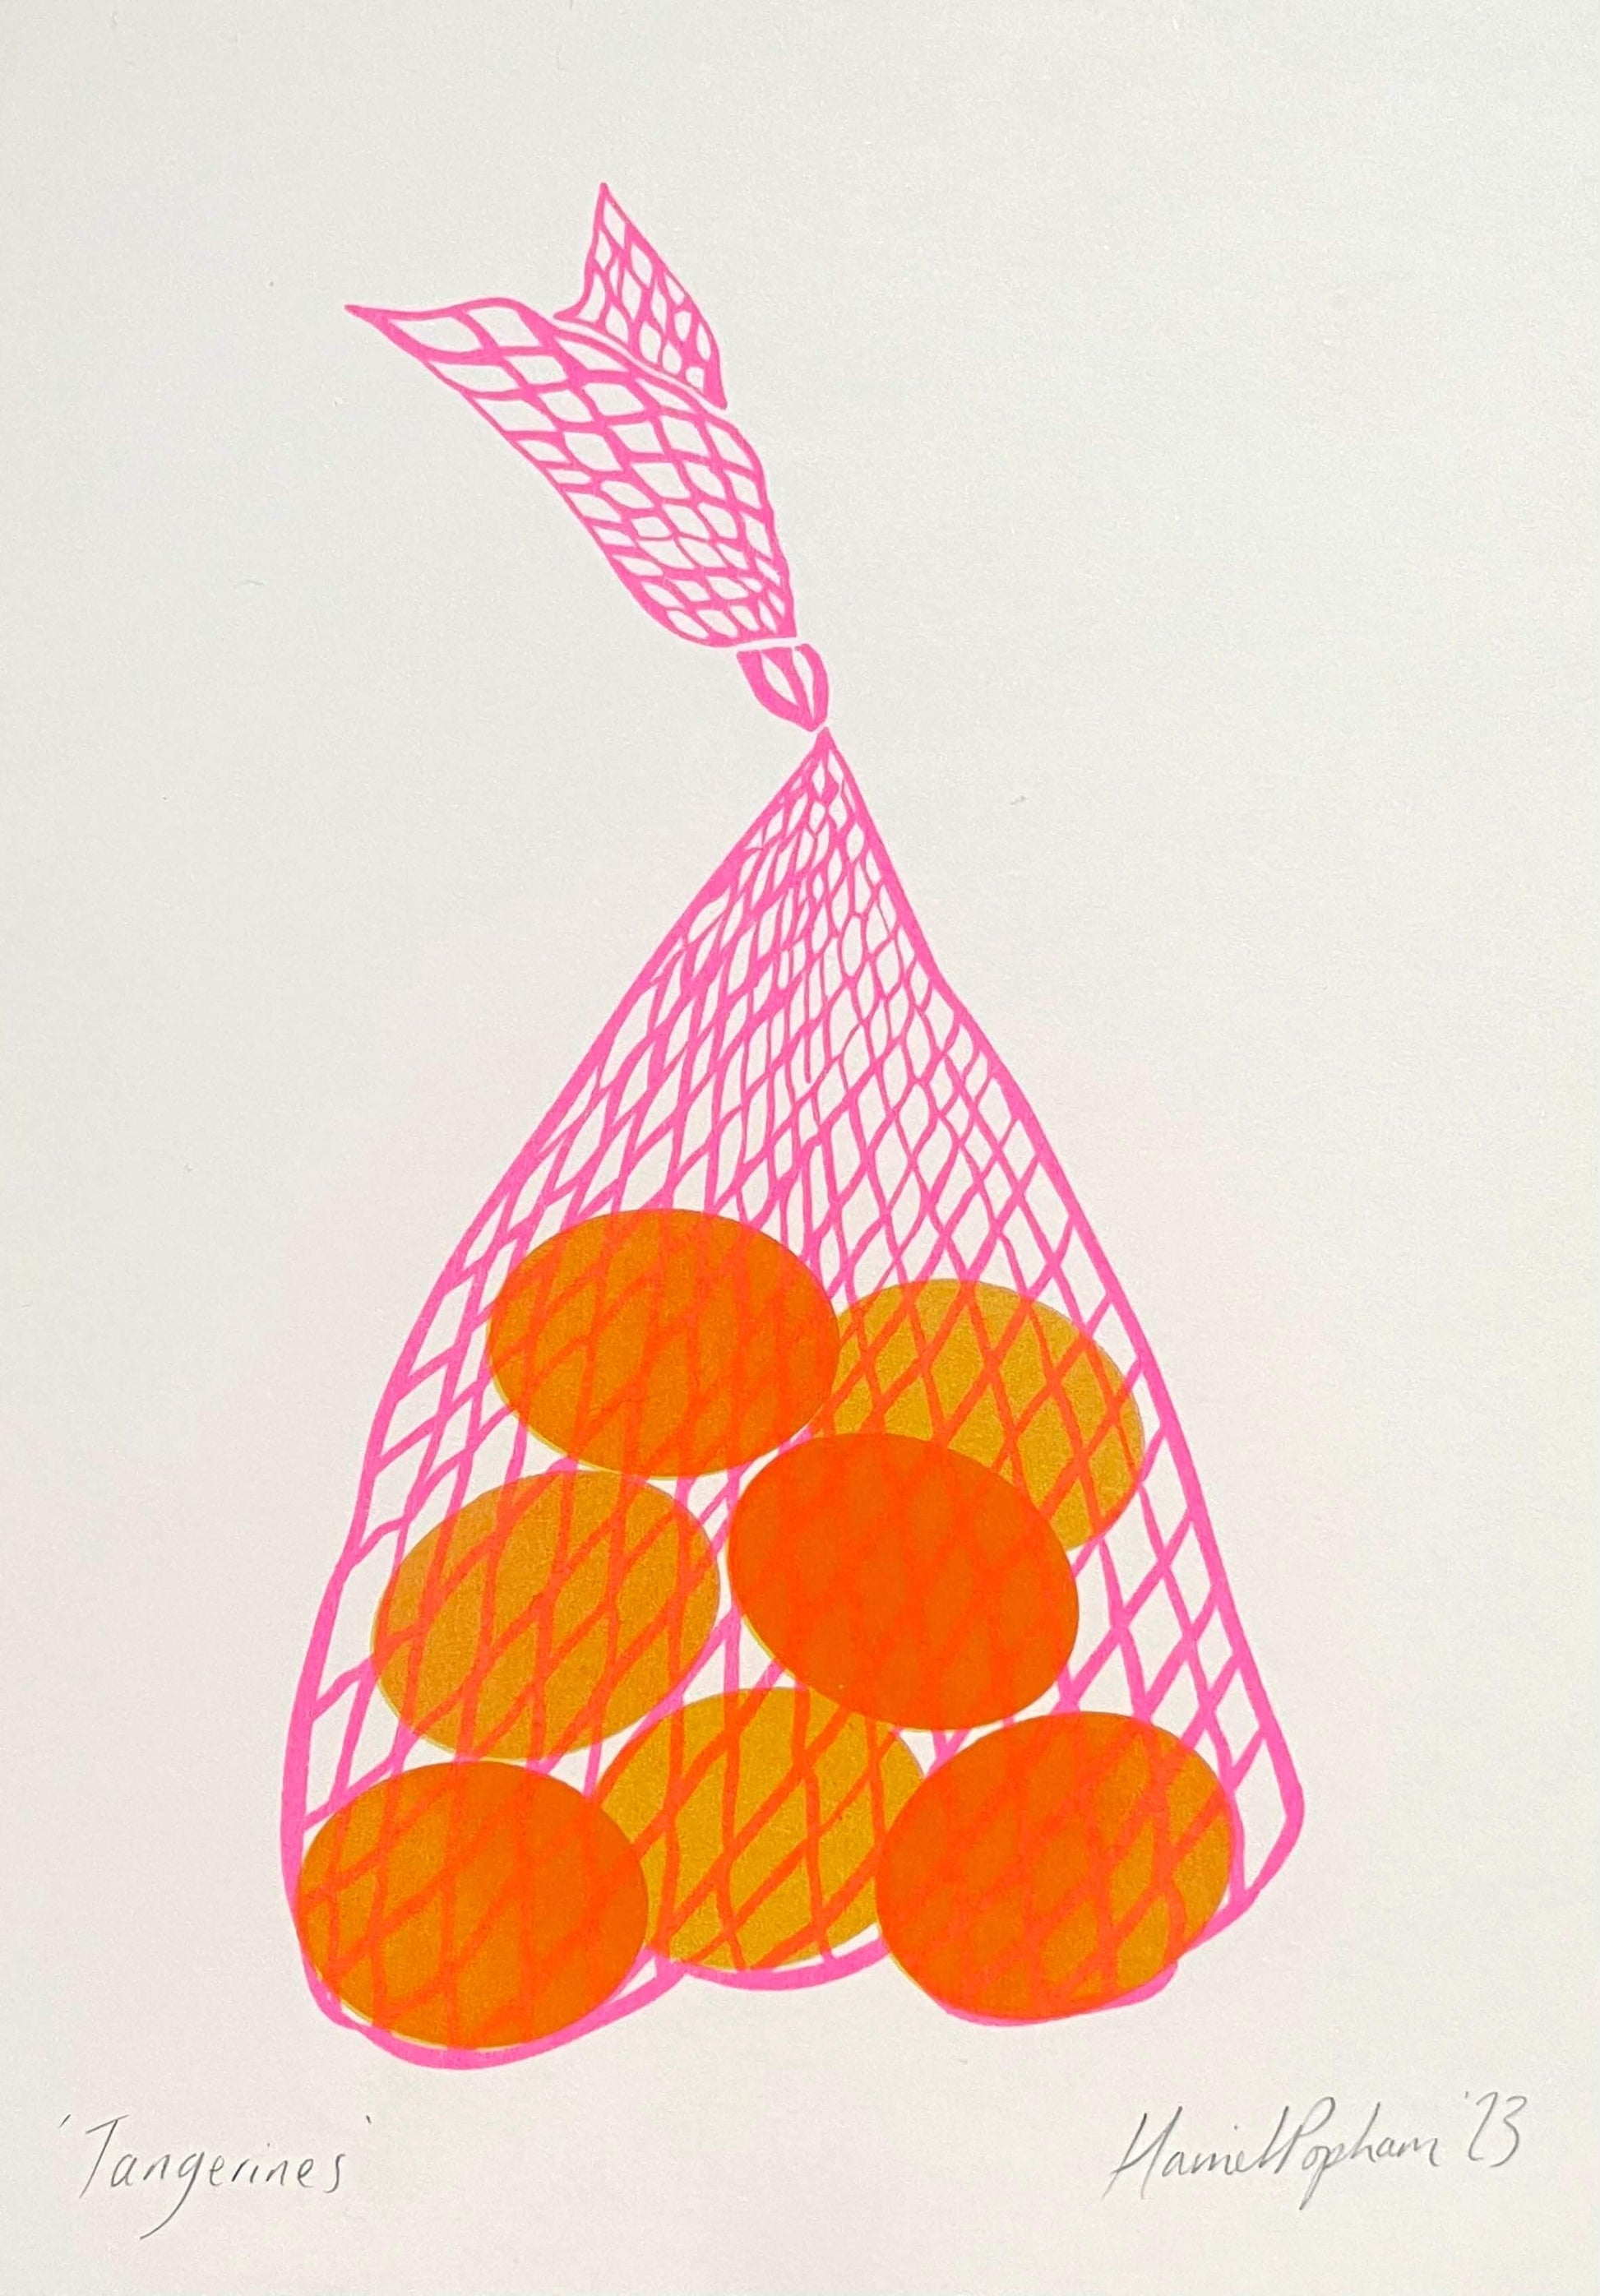 Harriet Popham Tangerines - A5 Riso Print on Tree Free Paper